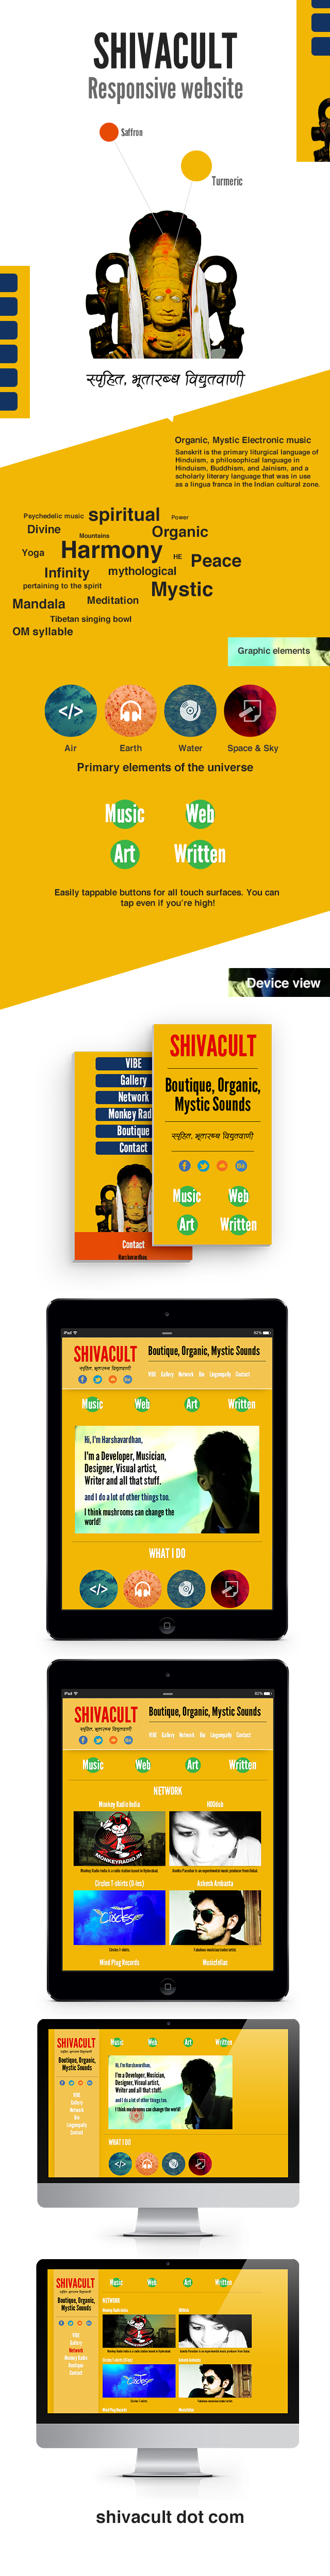 Shivacult: Responisve website -1